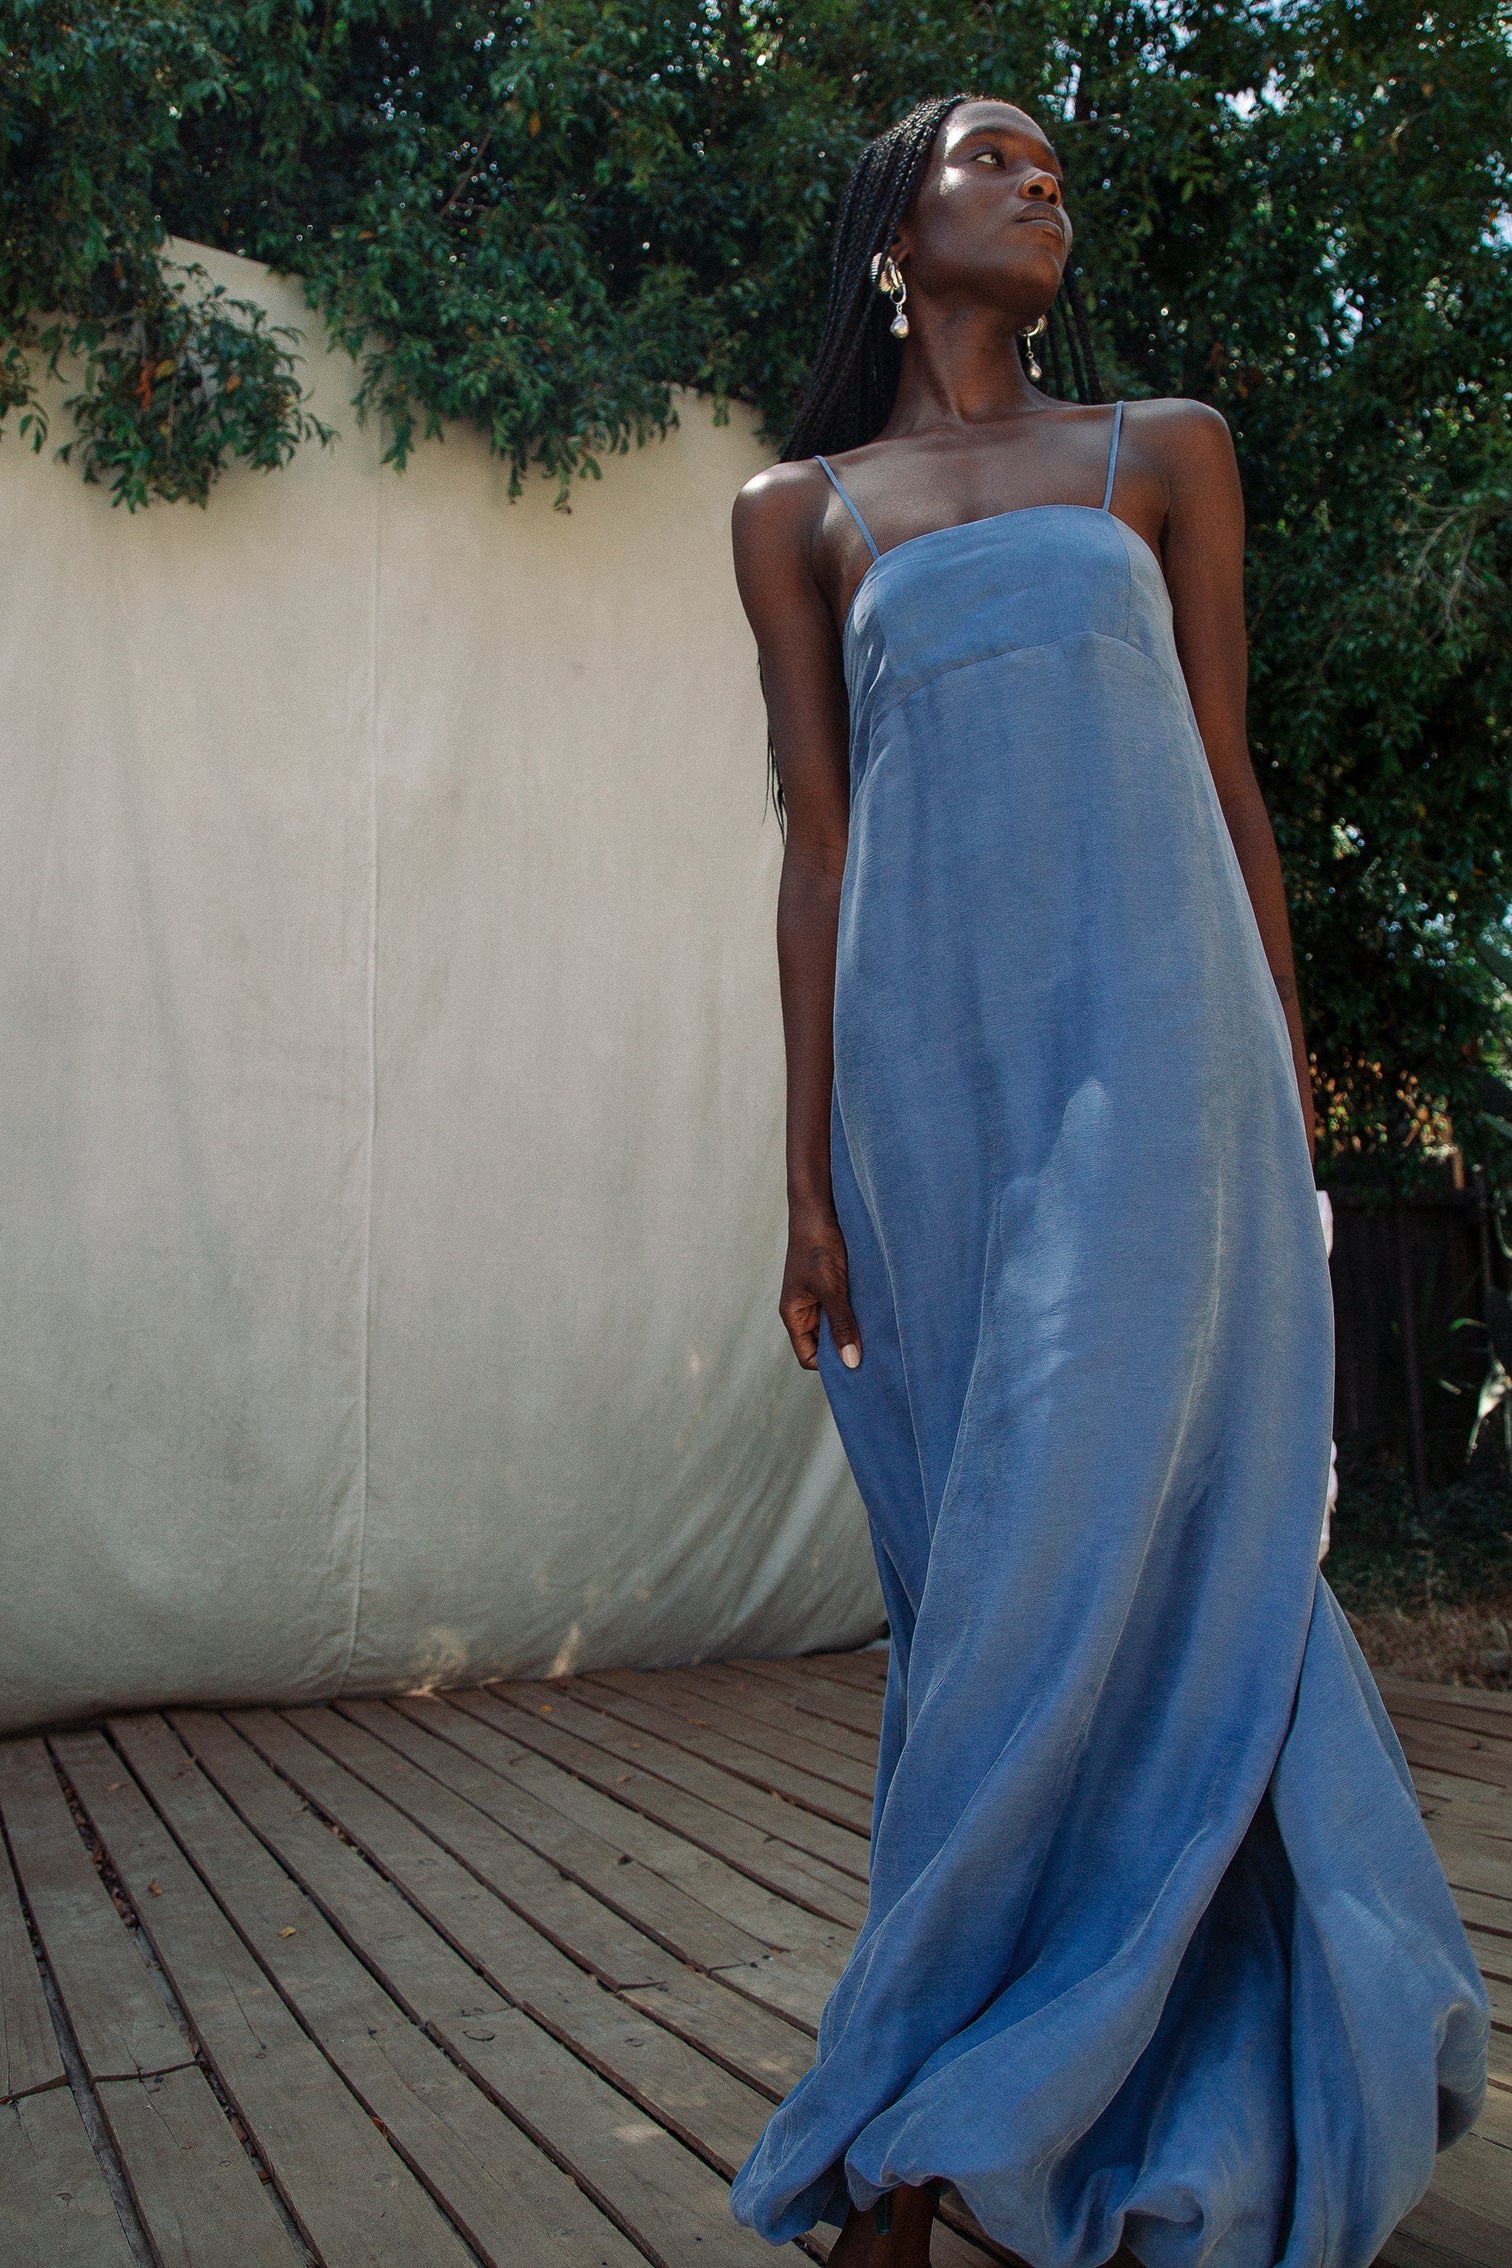 Erma Dress, French Blue